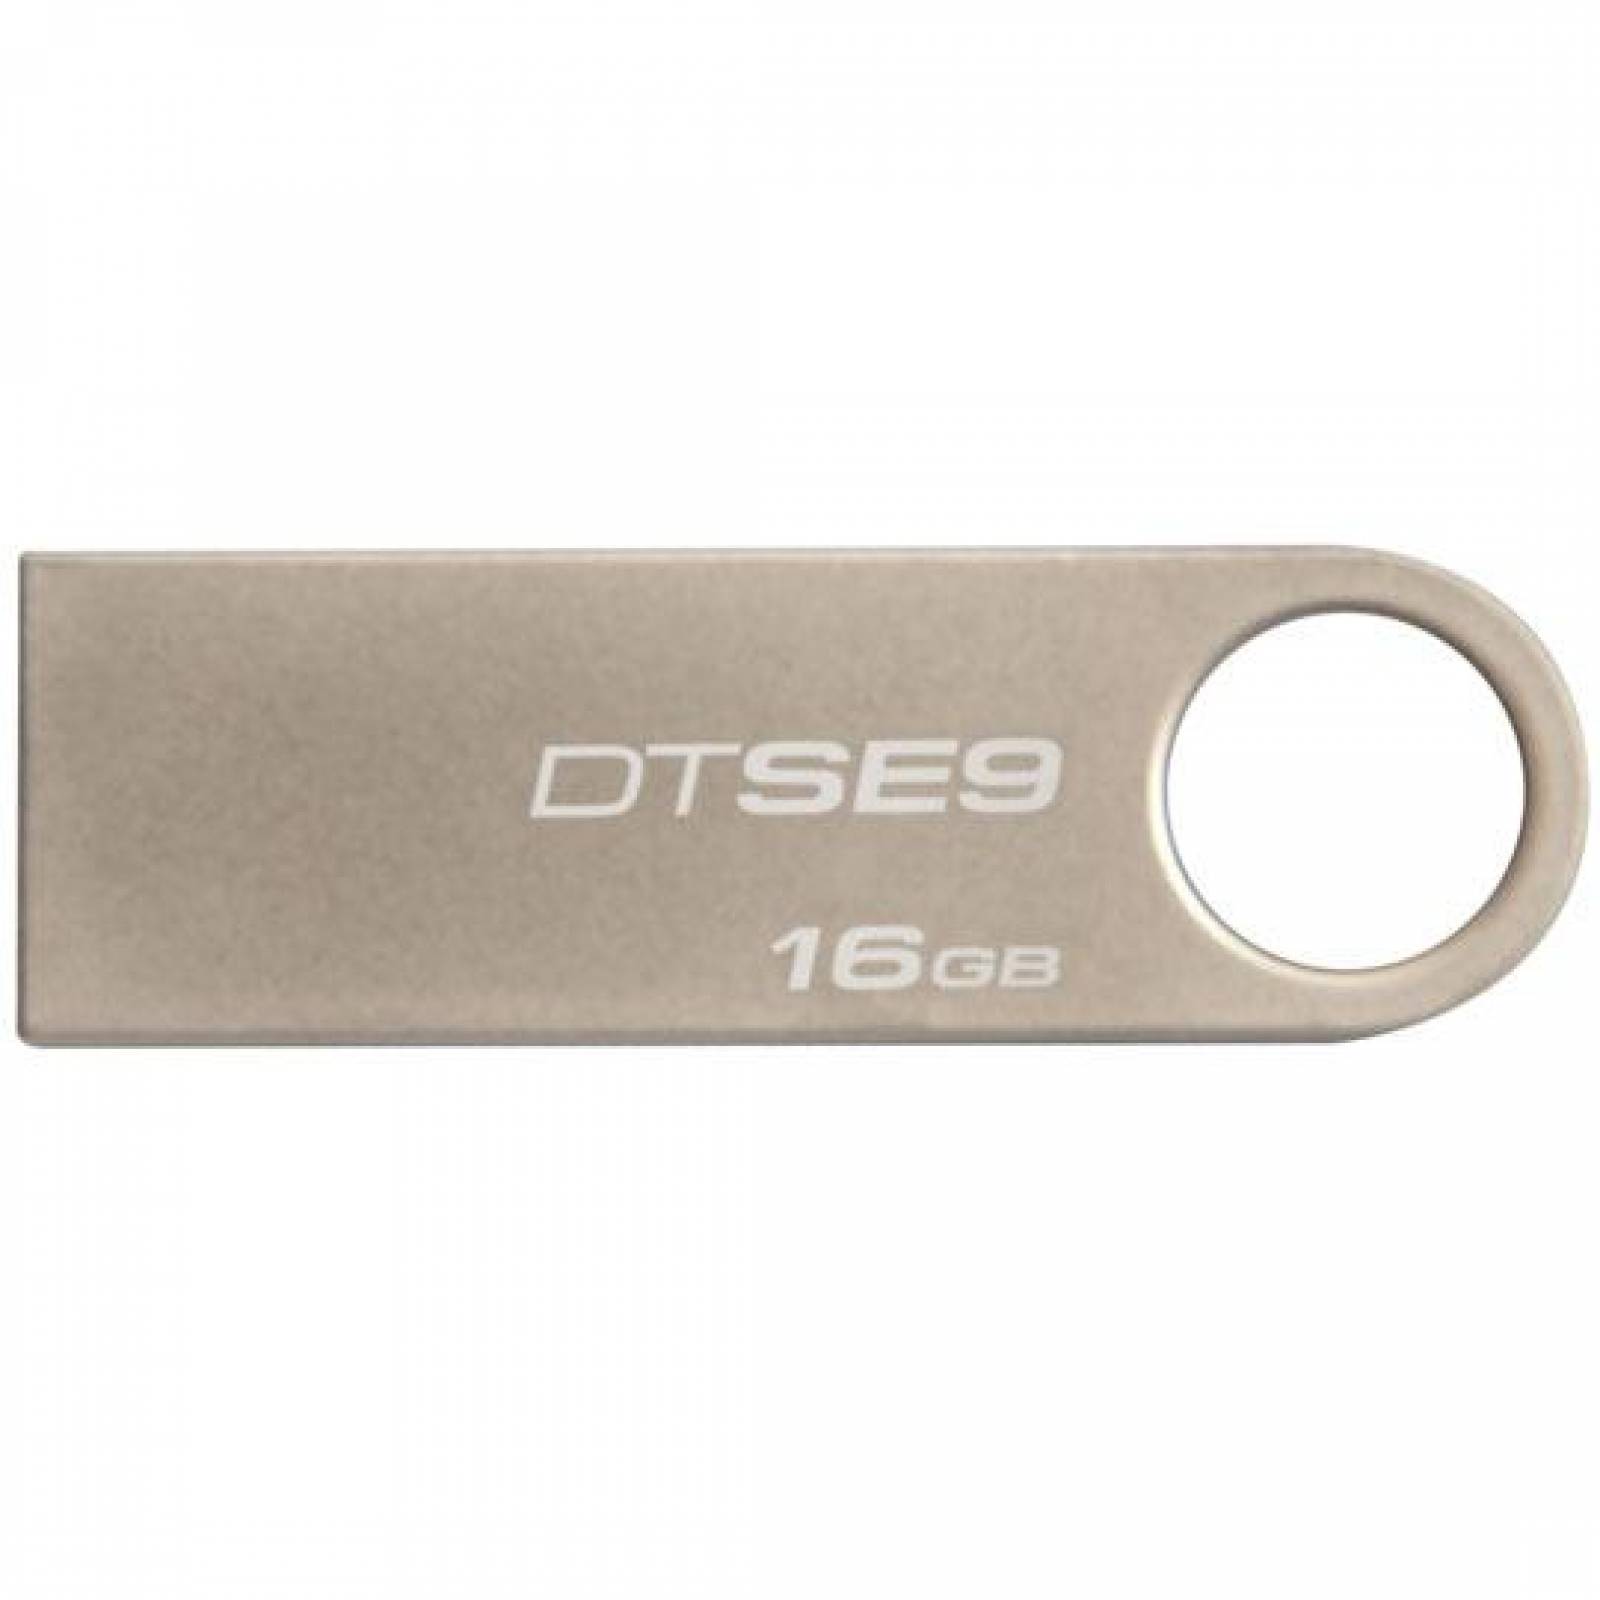 MEMORIA USB 2.0 KINGSTON DTSE9H DE 16 GB GRIS